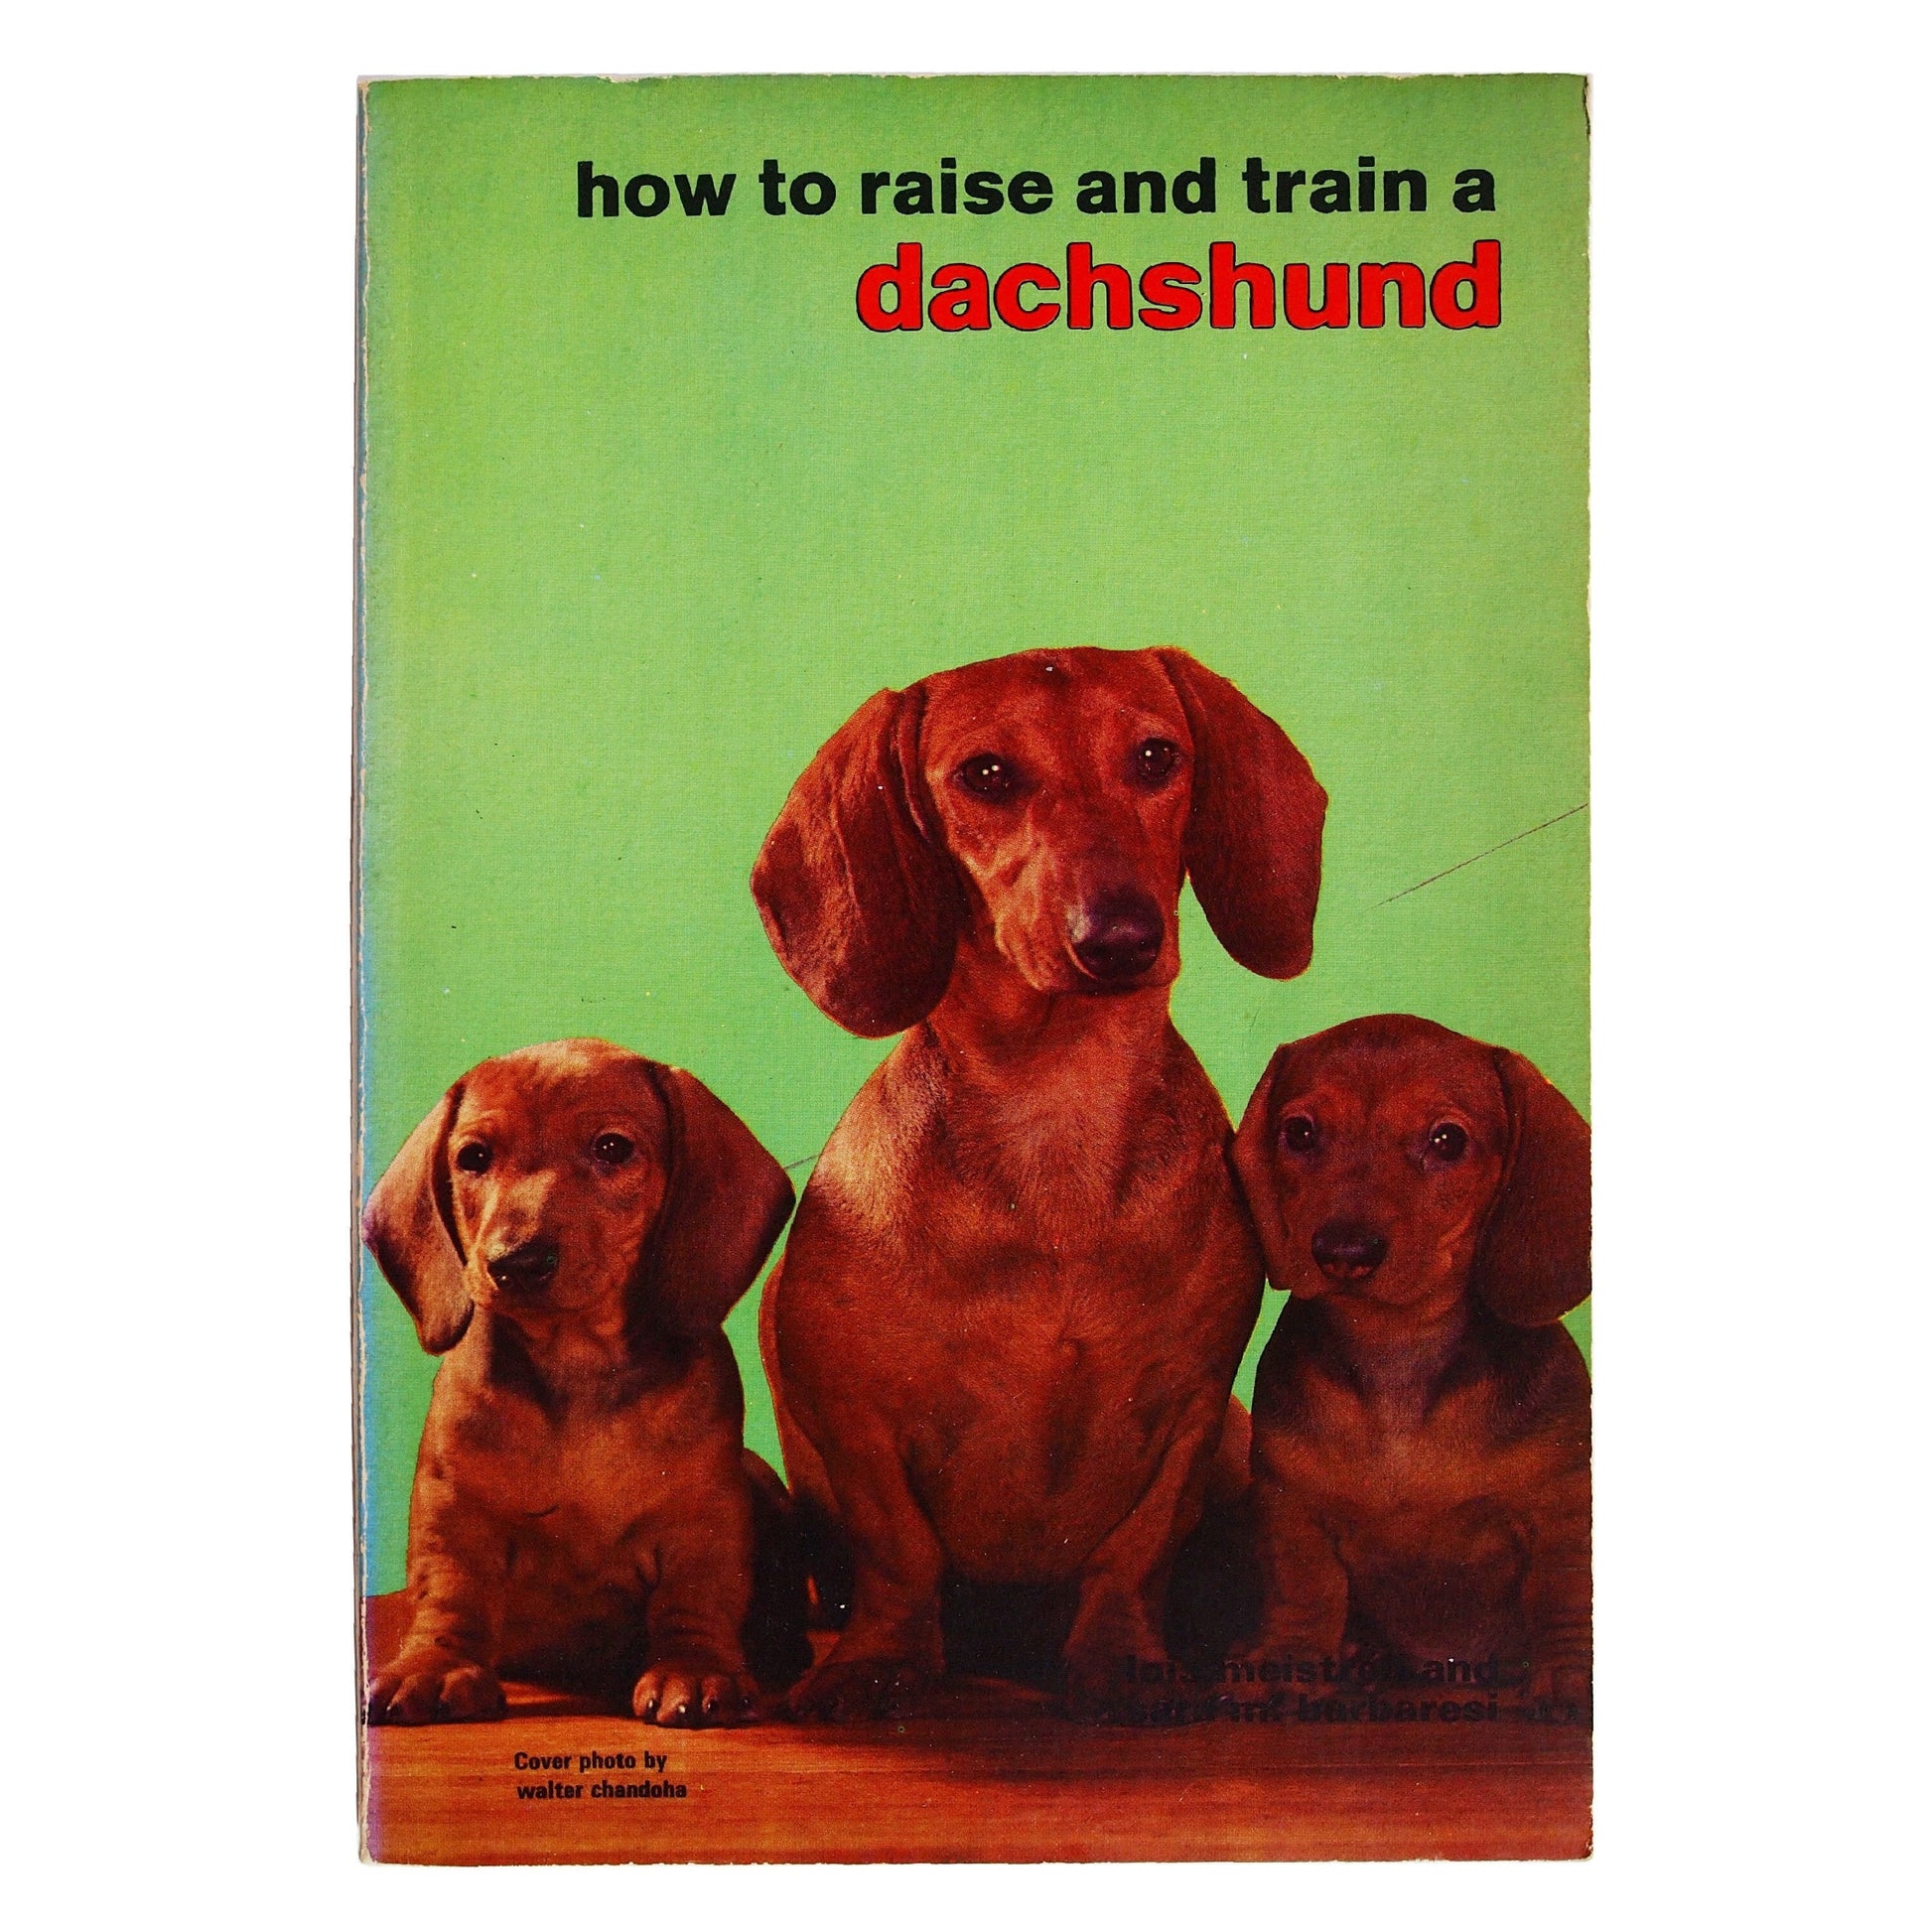 How To Raise and Train a Dachshund